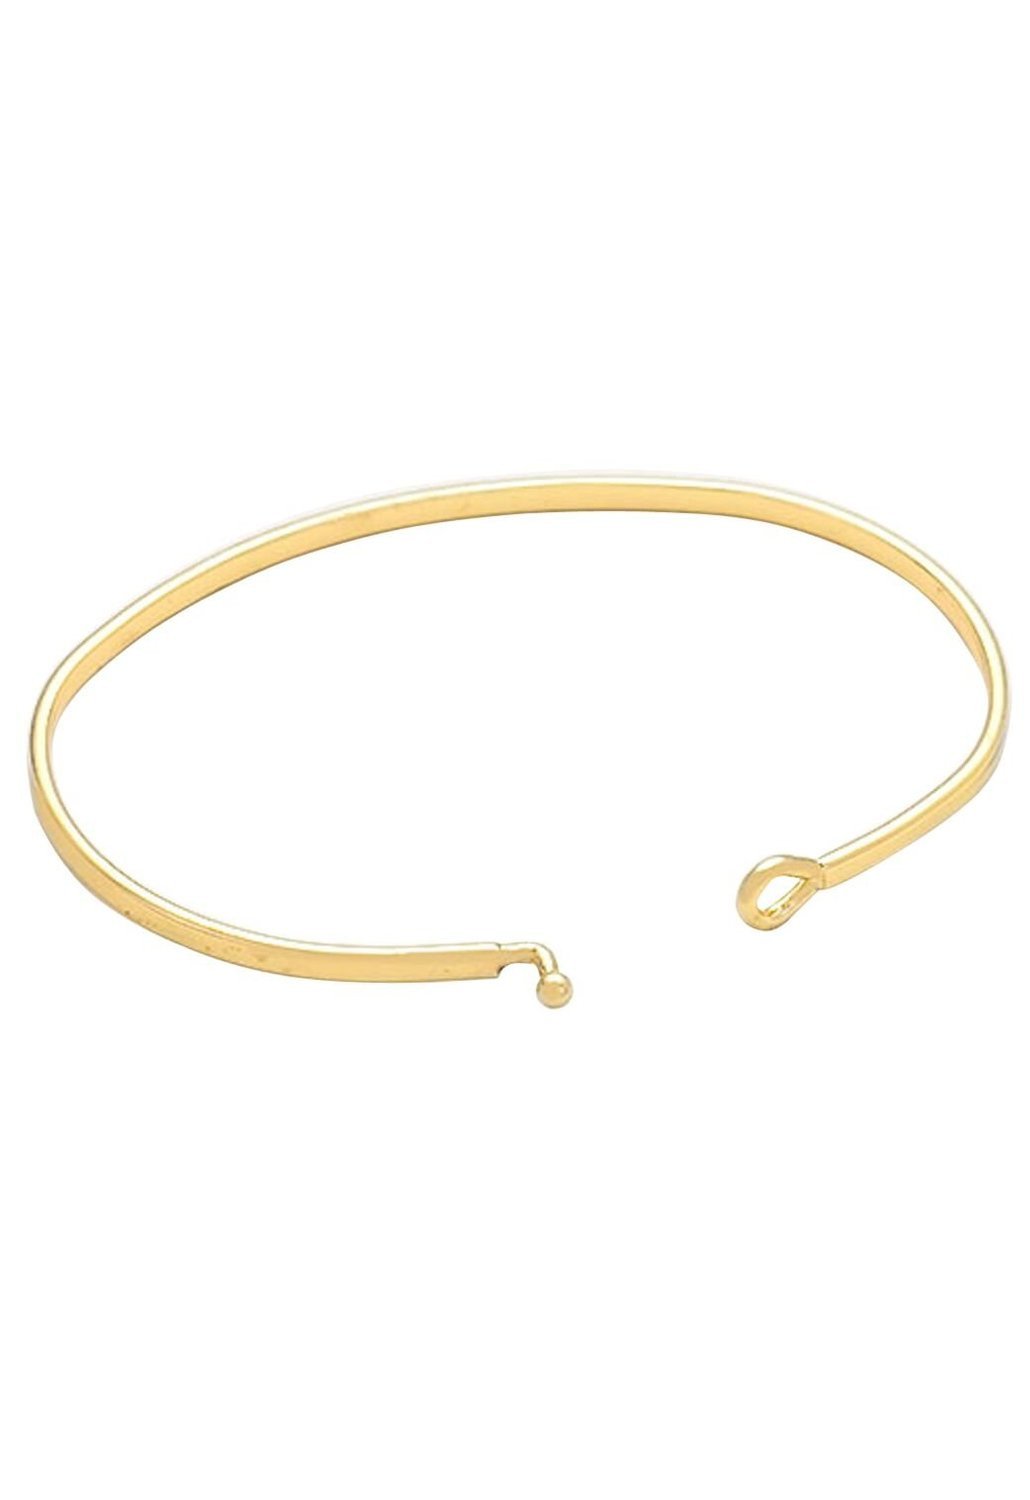 Thin Hook Bangle Bracelet Gold Color "Follow Your Heart"